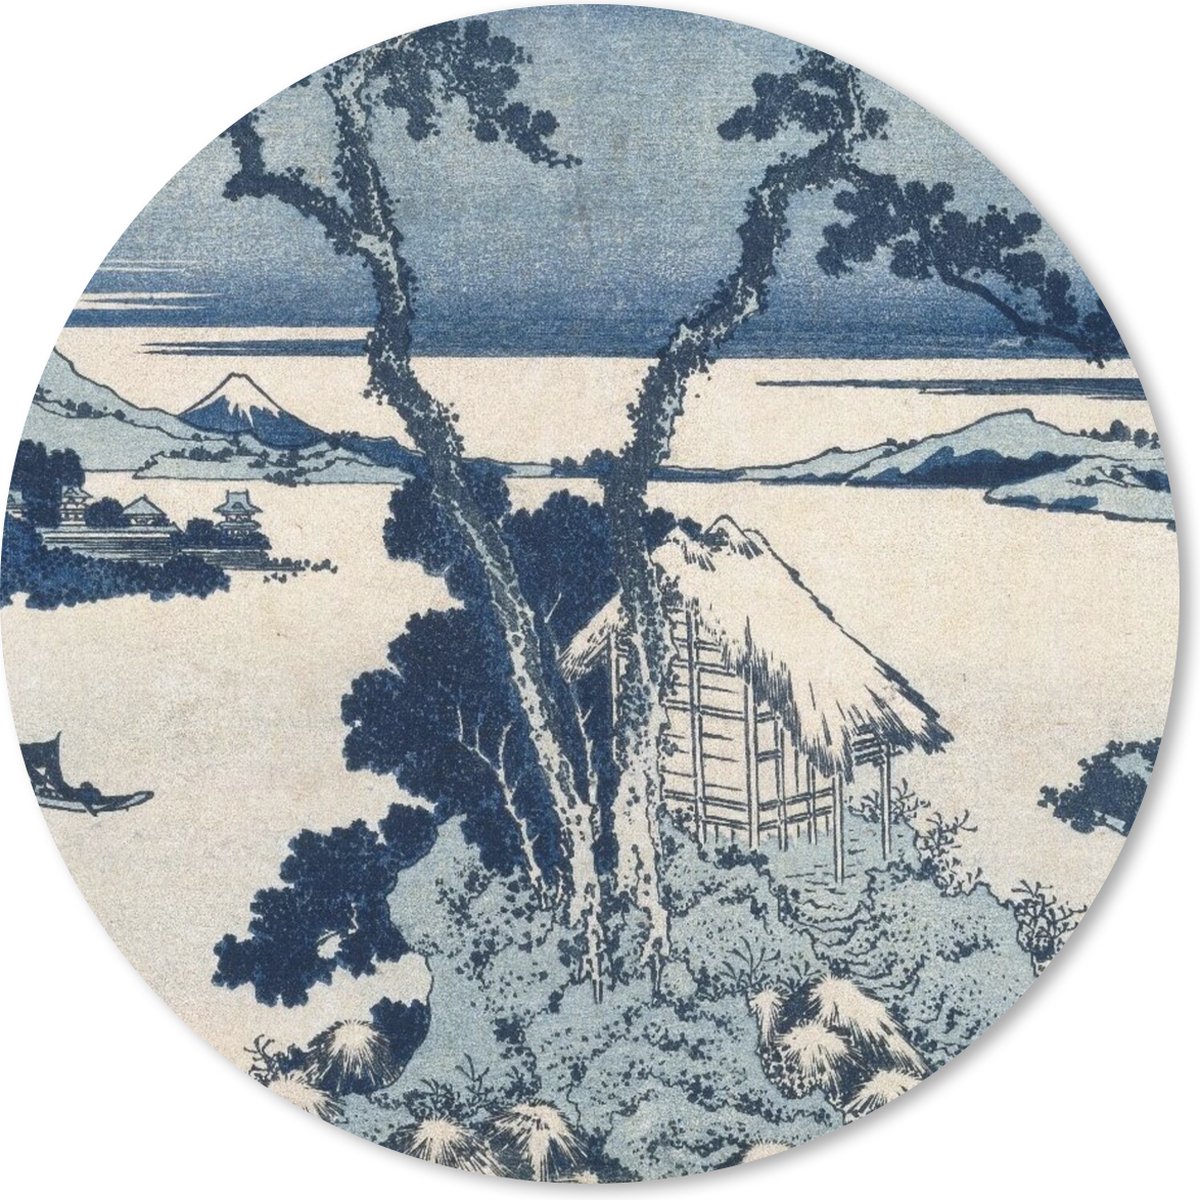 Muismat - Mousepad - Rond - Uitzicht op Mount Fuji - schilderij van Katsushika Hokusai - 40x40 cm - Ronde muismat